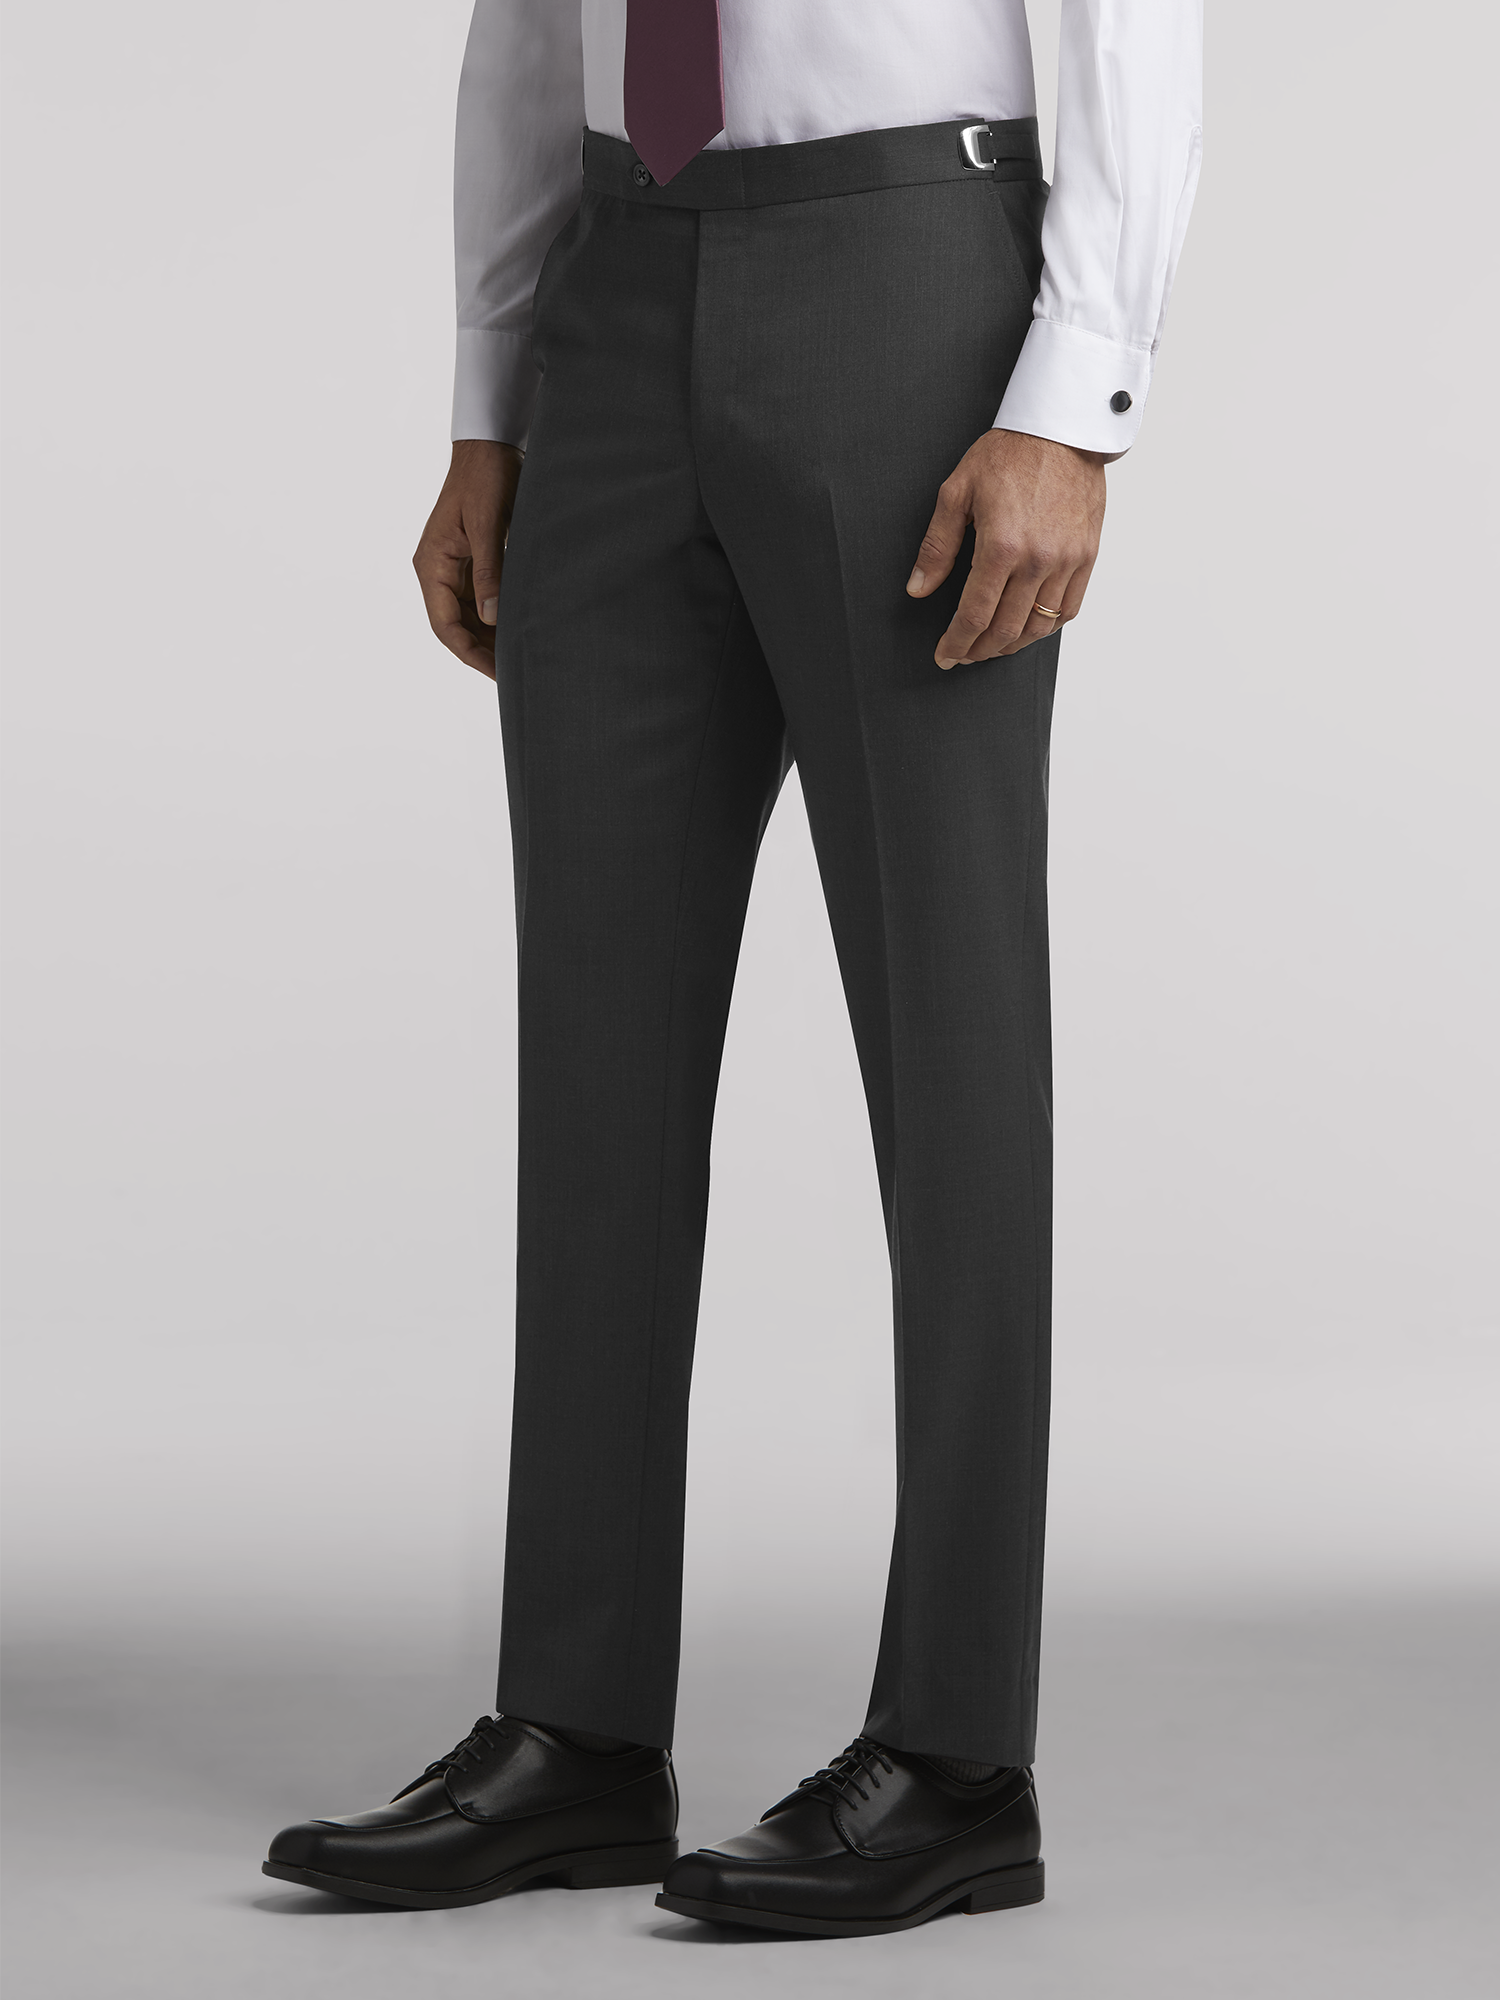 Vera Wang Slim Fit Tuxedo Pant | Men's Suits & Separates | Moores Clothing